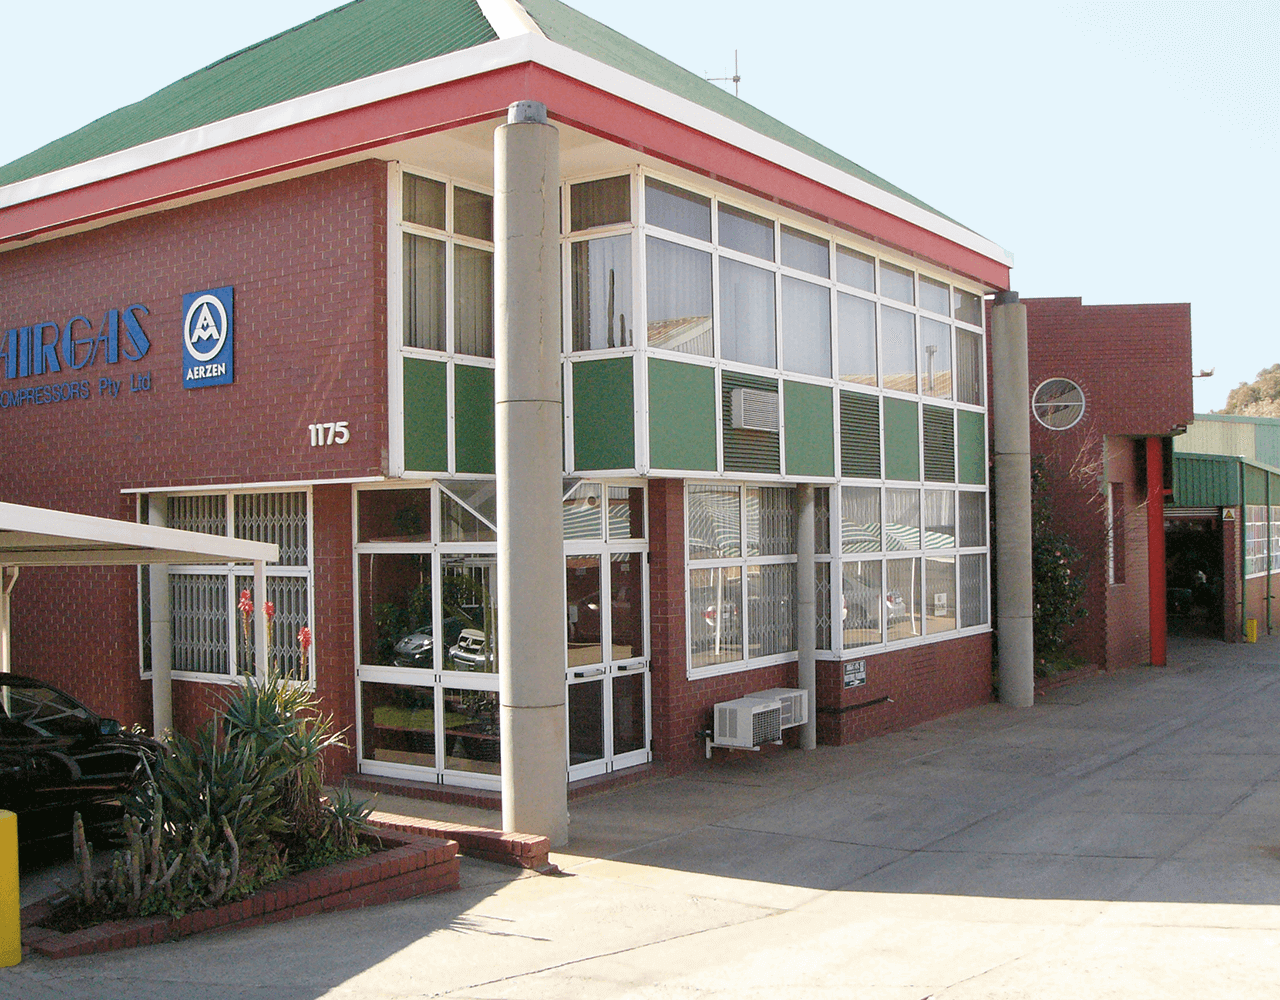 Bild på Airgas Compressors byggnad i Sydafrika